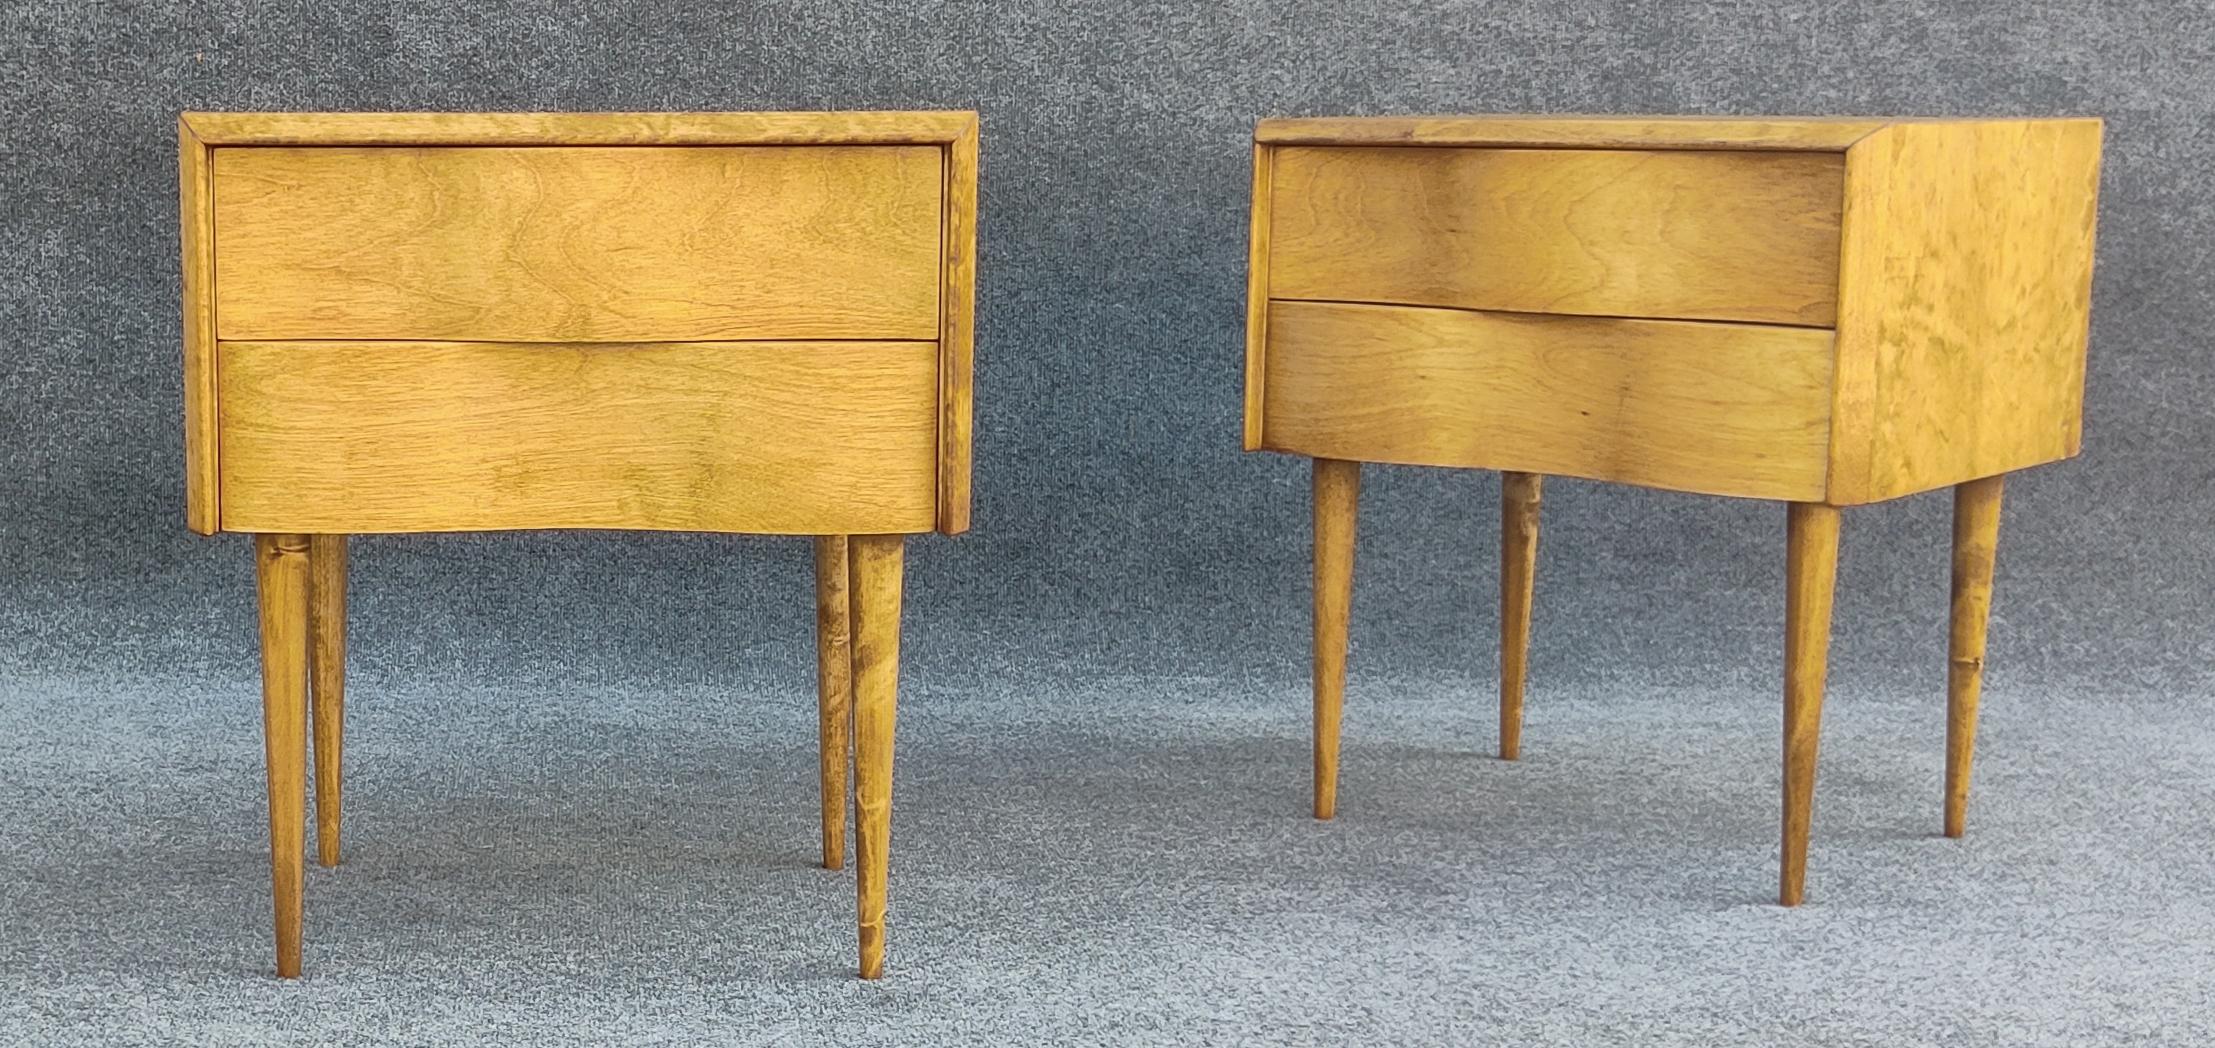 Mid-20th Century Restored Pair of Edmund Spence Golden Birch Wavy Front Nightstands, Sweden 1950s For Sale